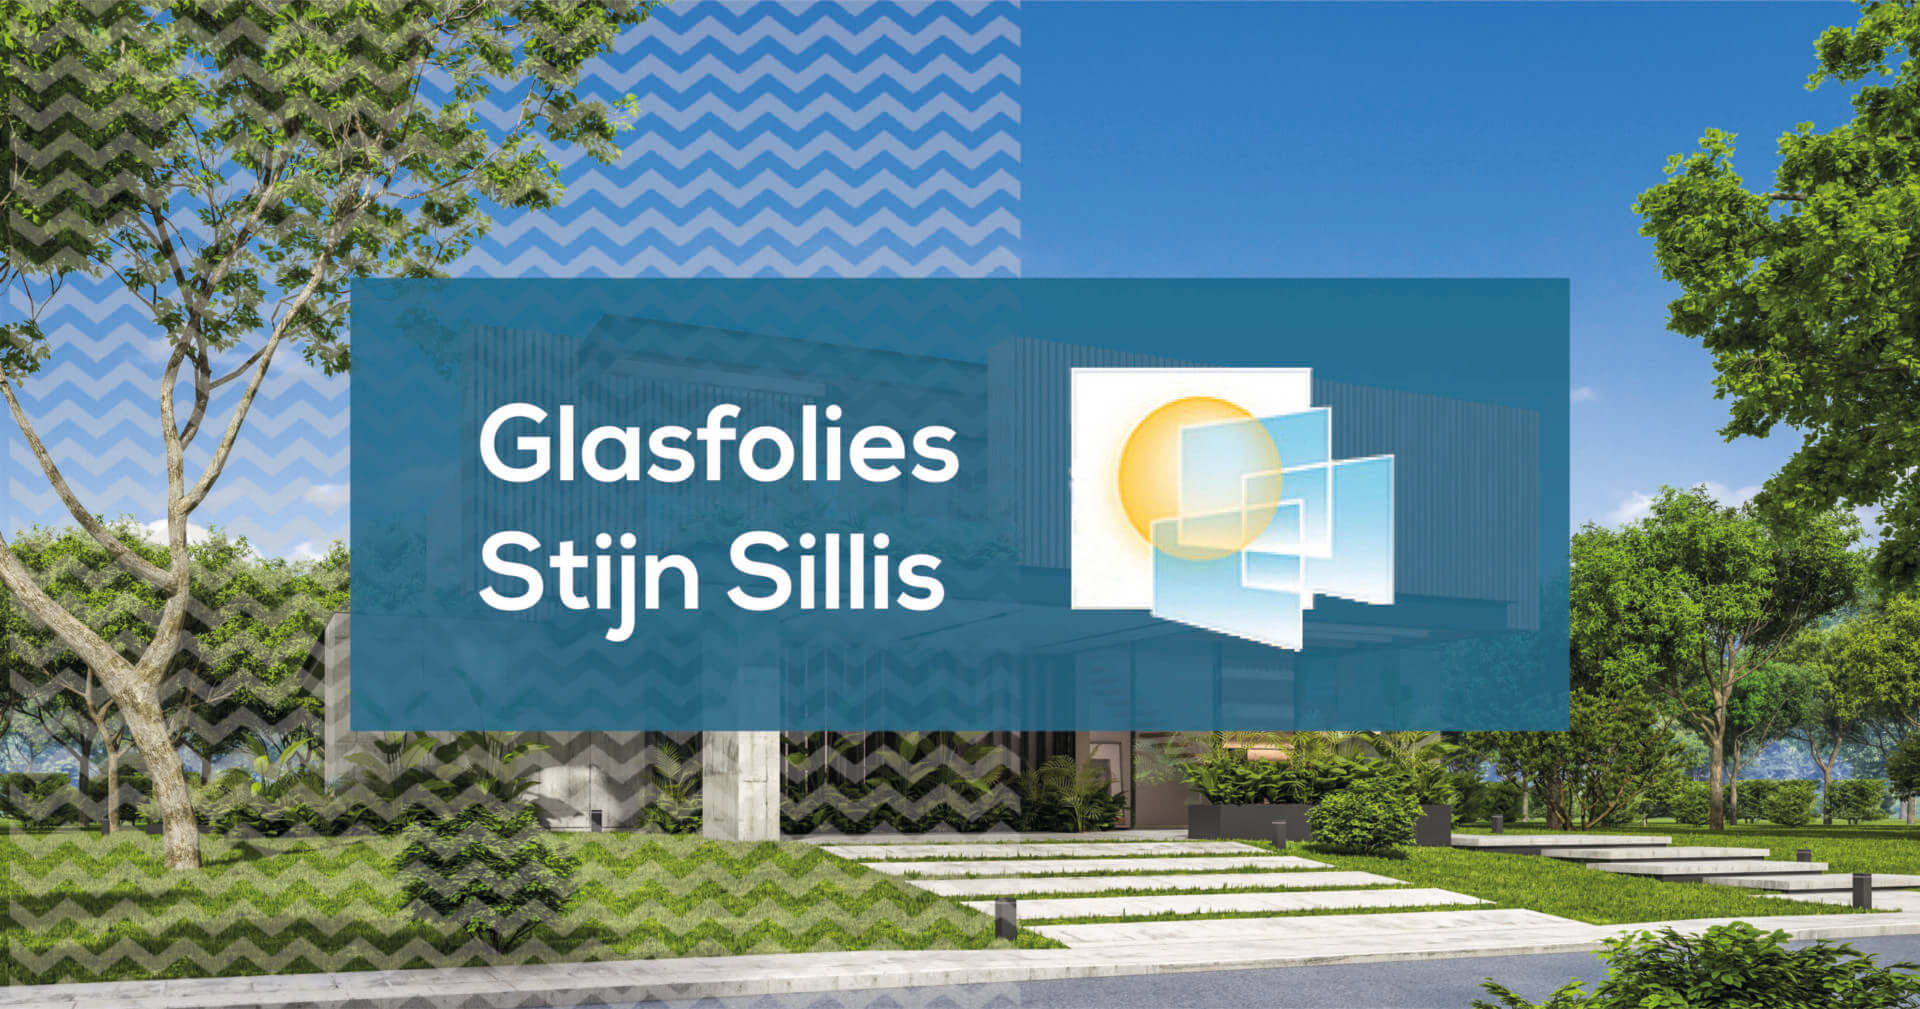 Glasfolies Stijn Sillis de Saint-Nicolas